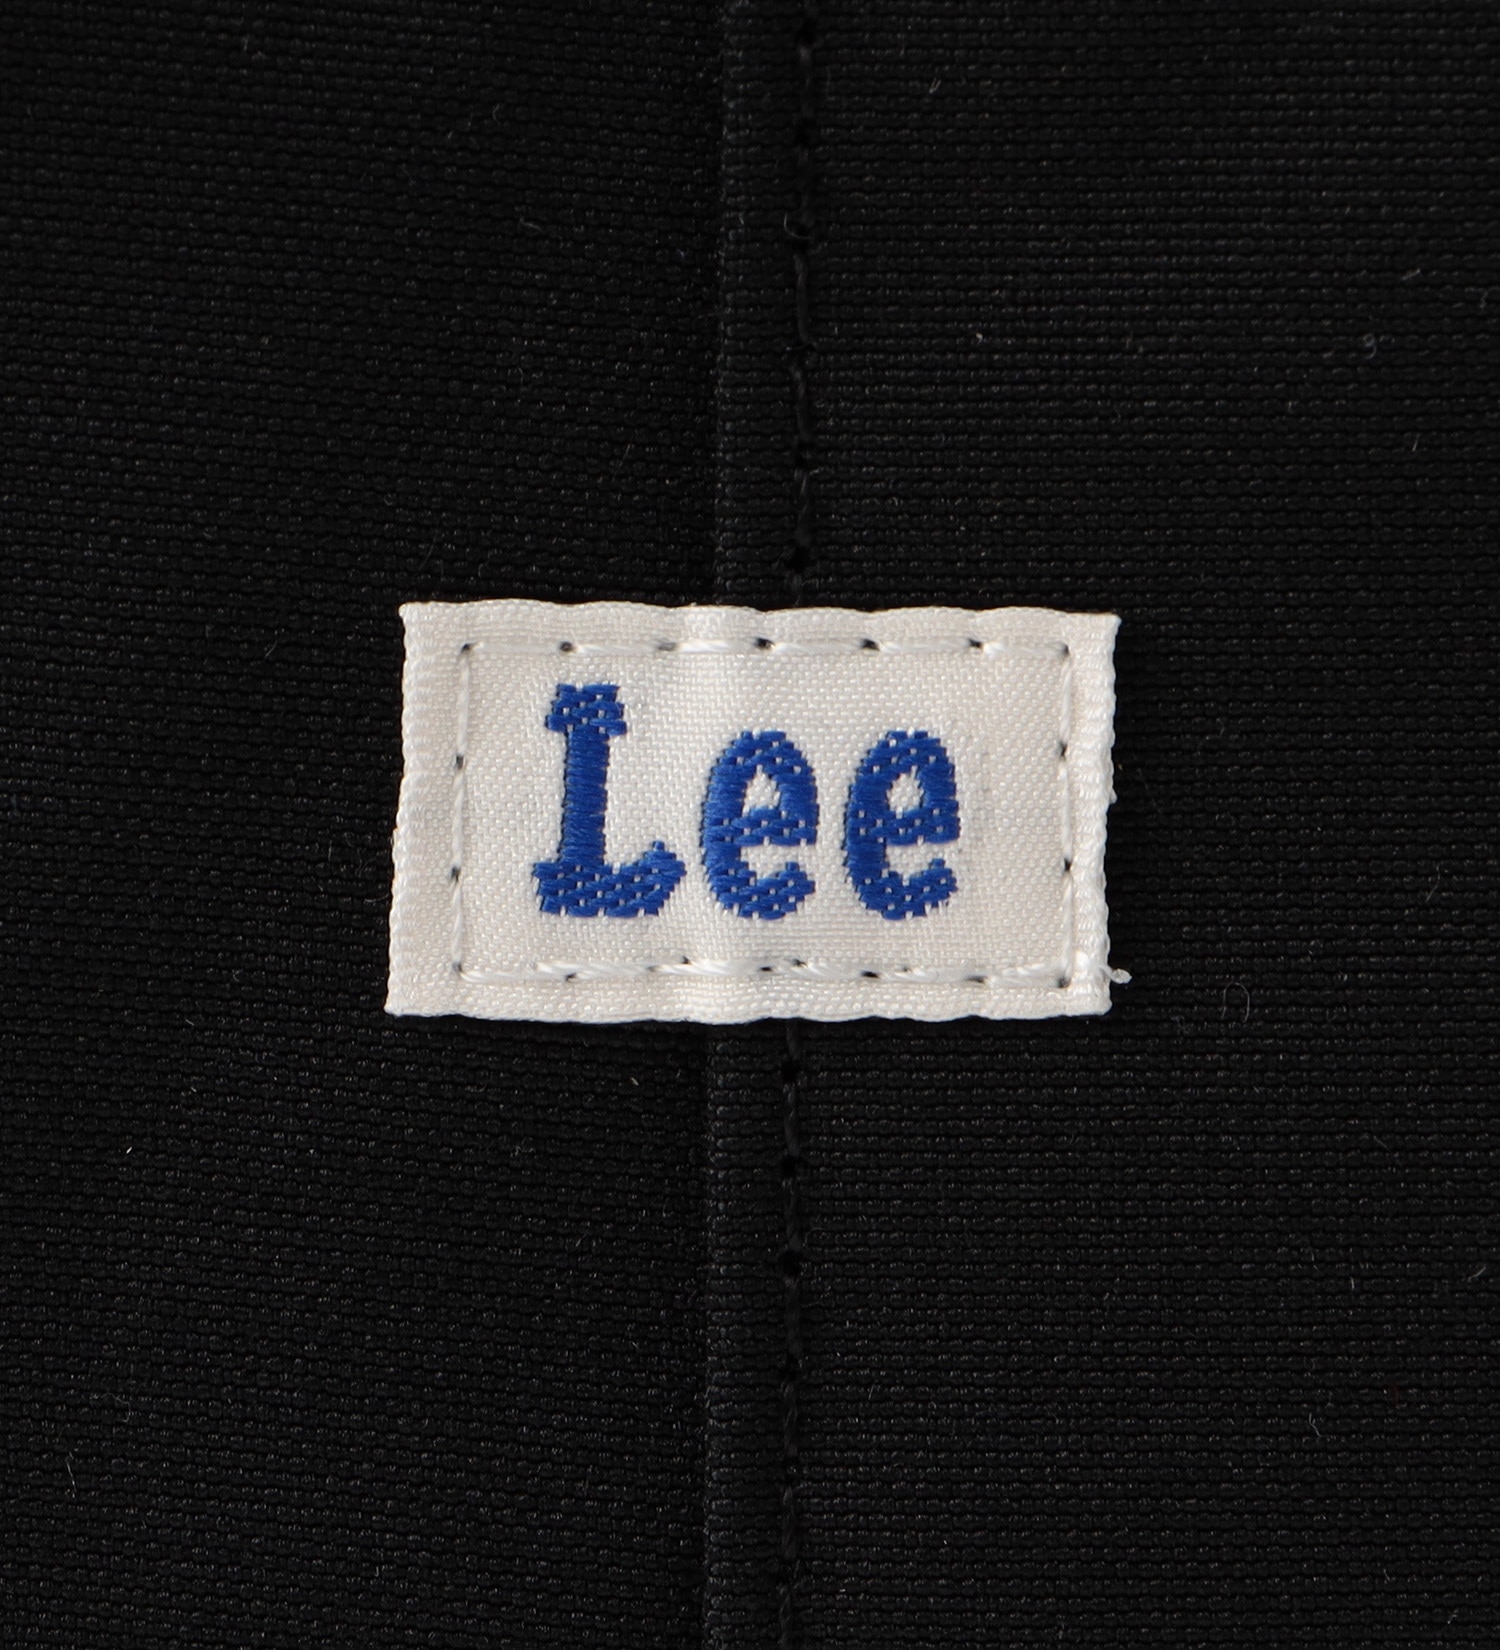 Lee(リー)のスクエアリュック|バッグ/バックパック/リュック/メンズ|ブラック